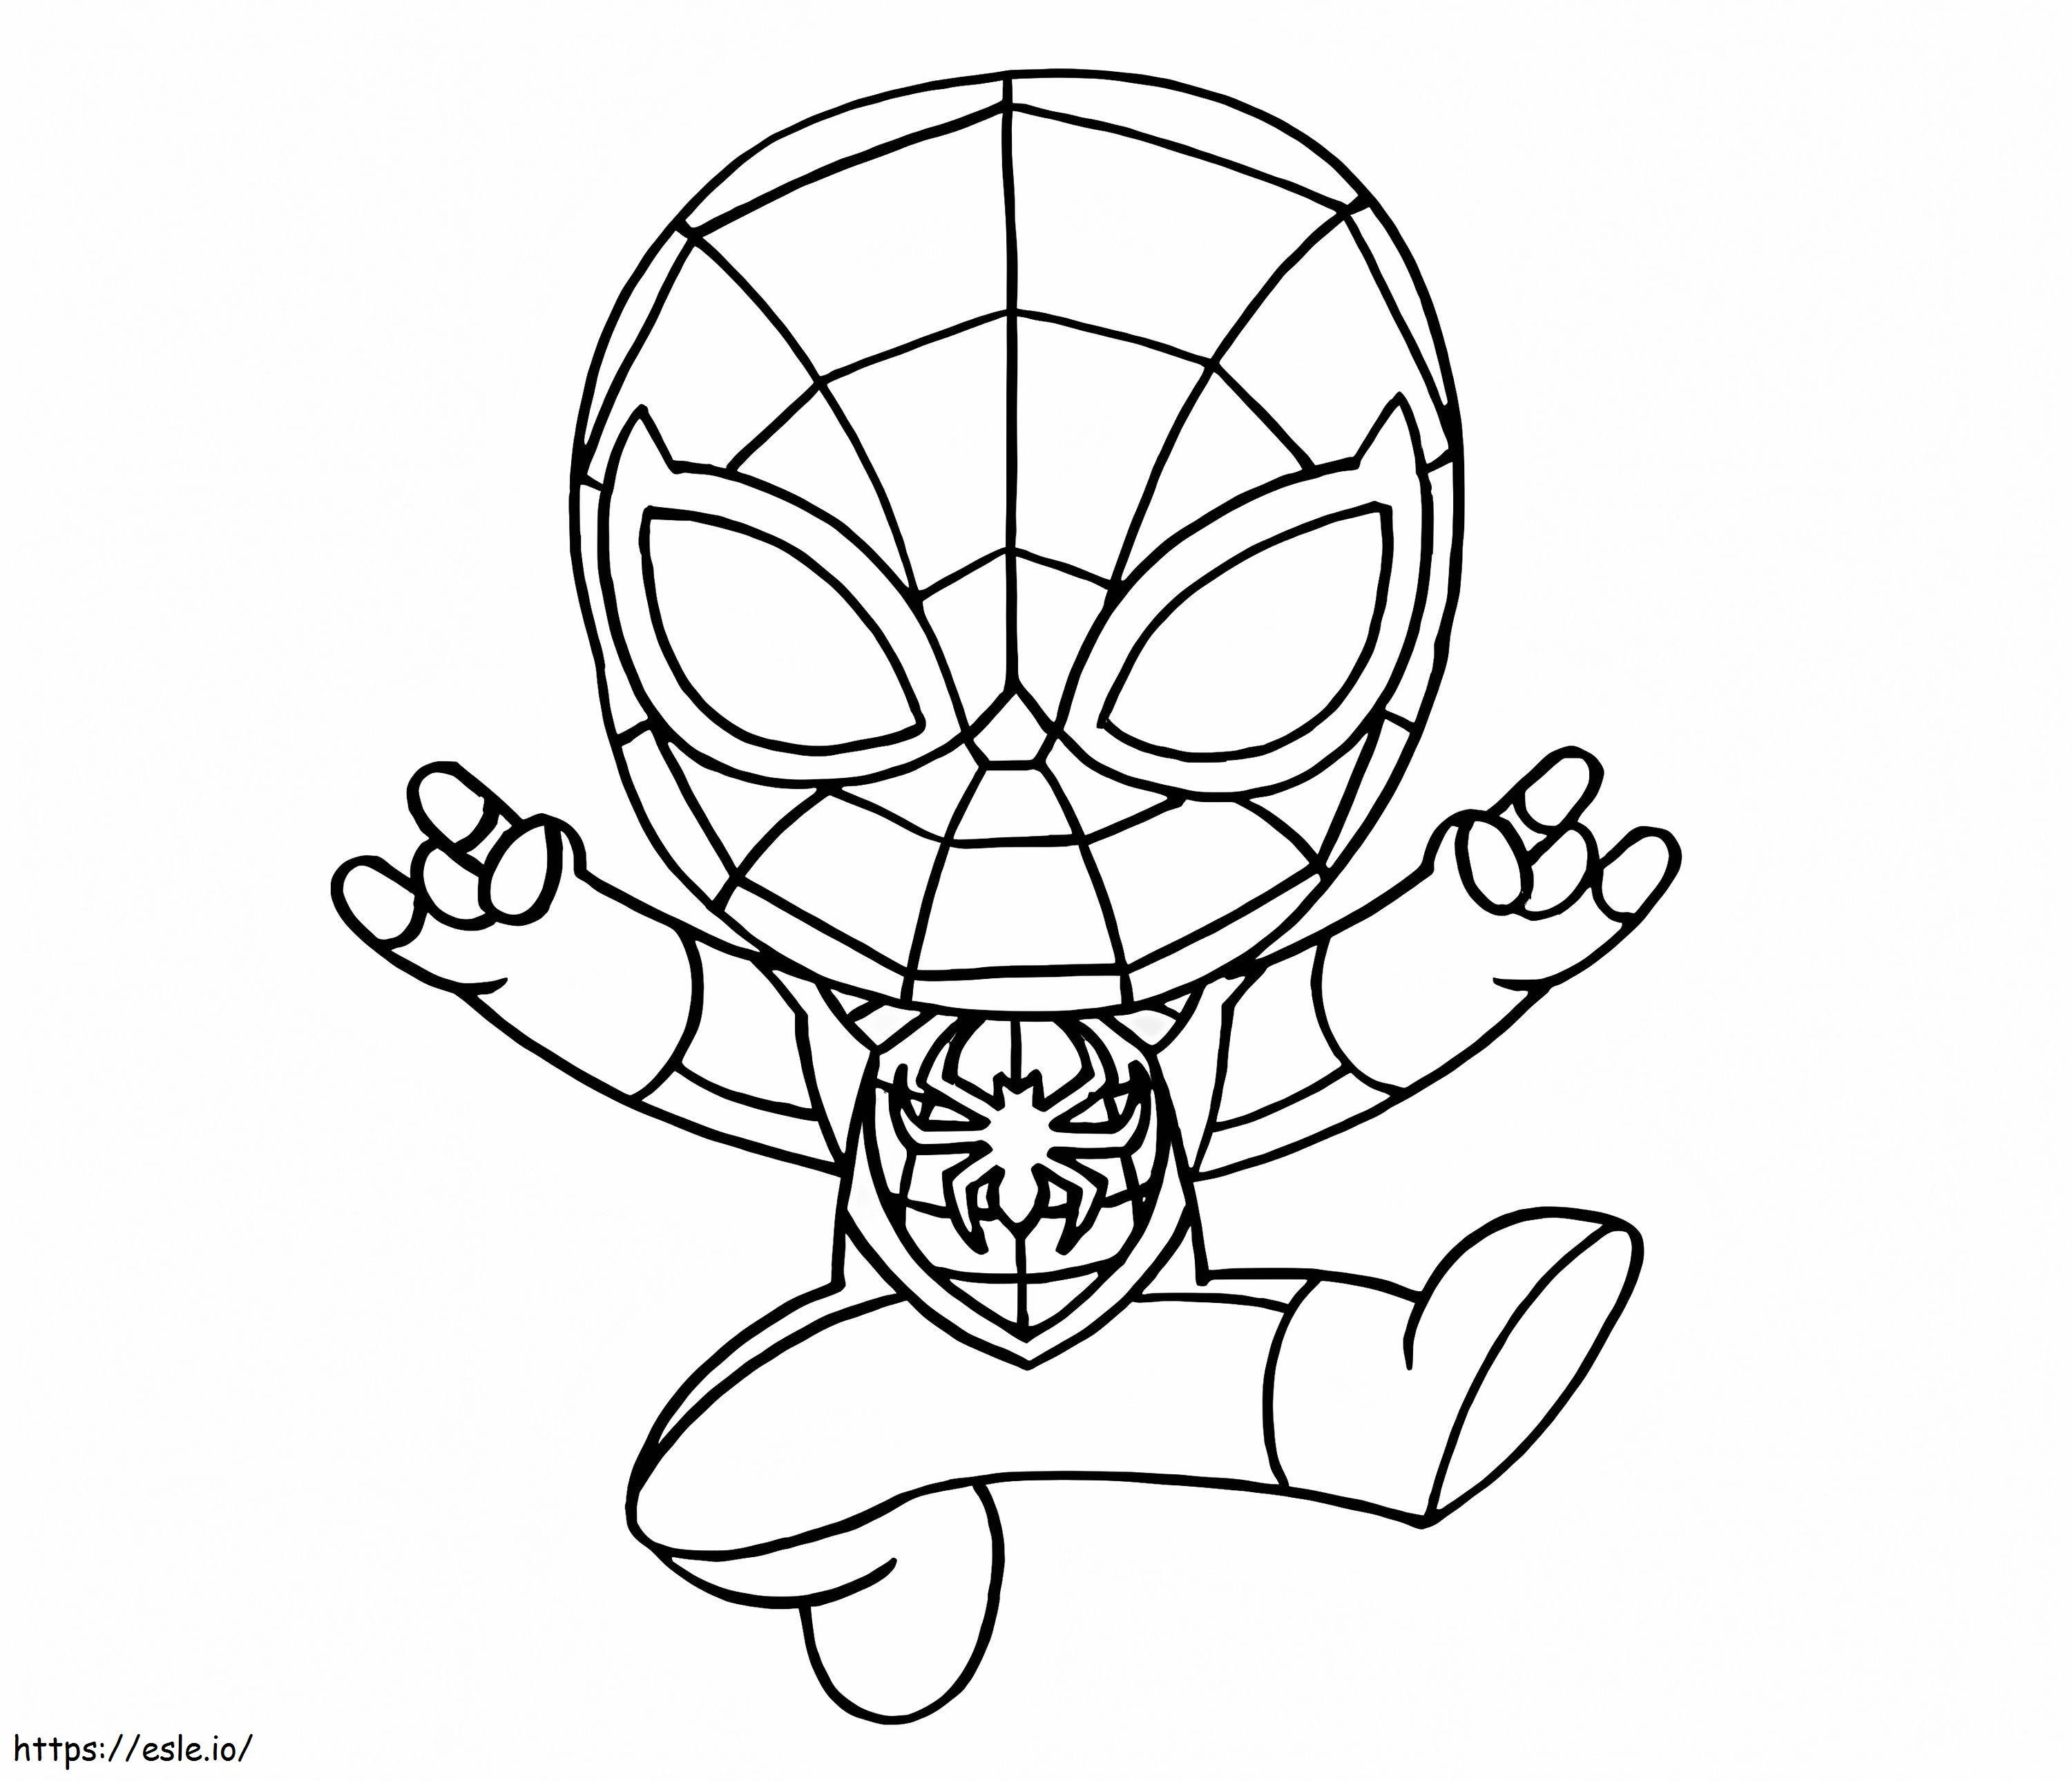 Chibi Spider Man Jumping coloring page